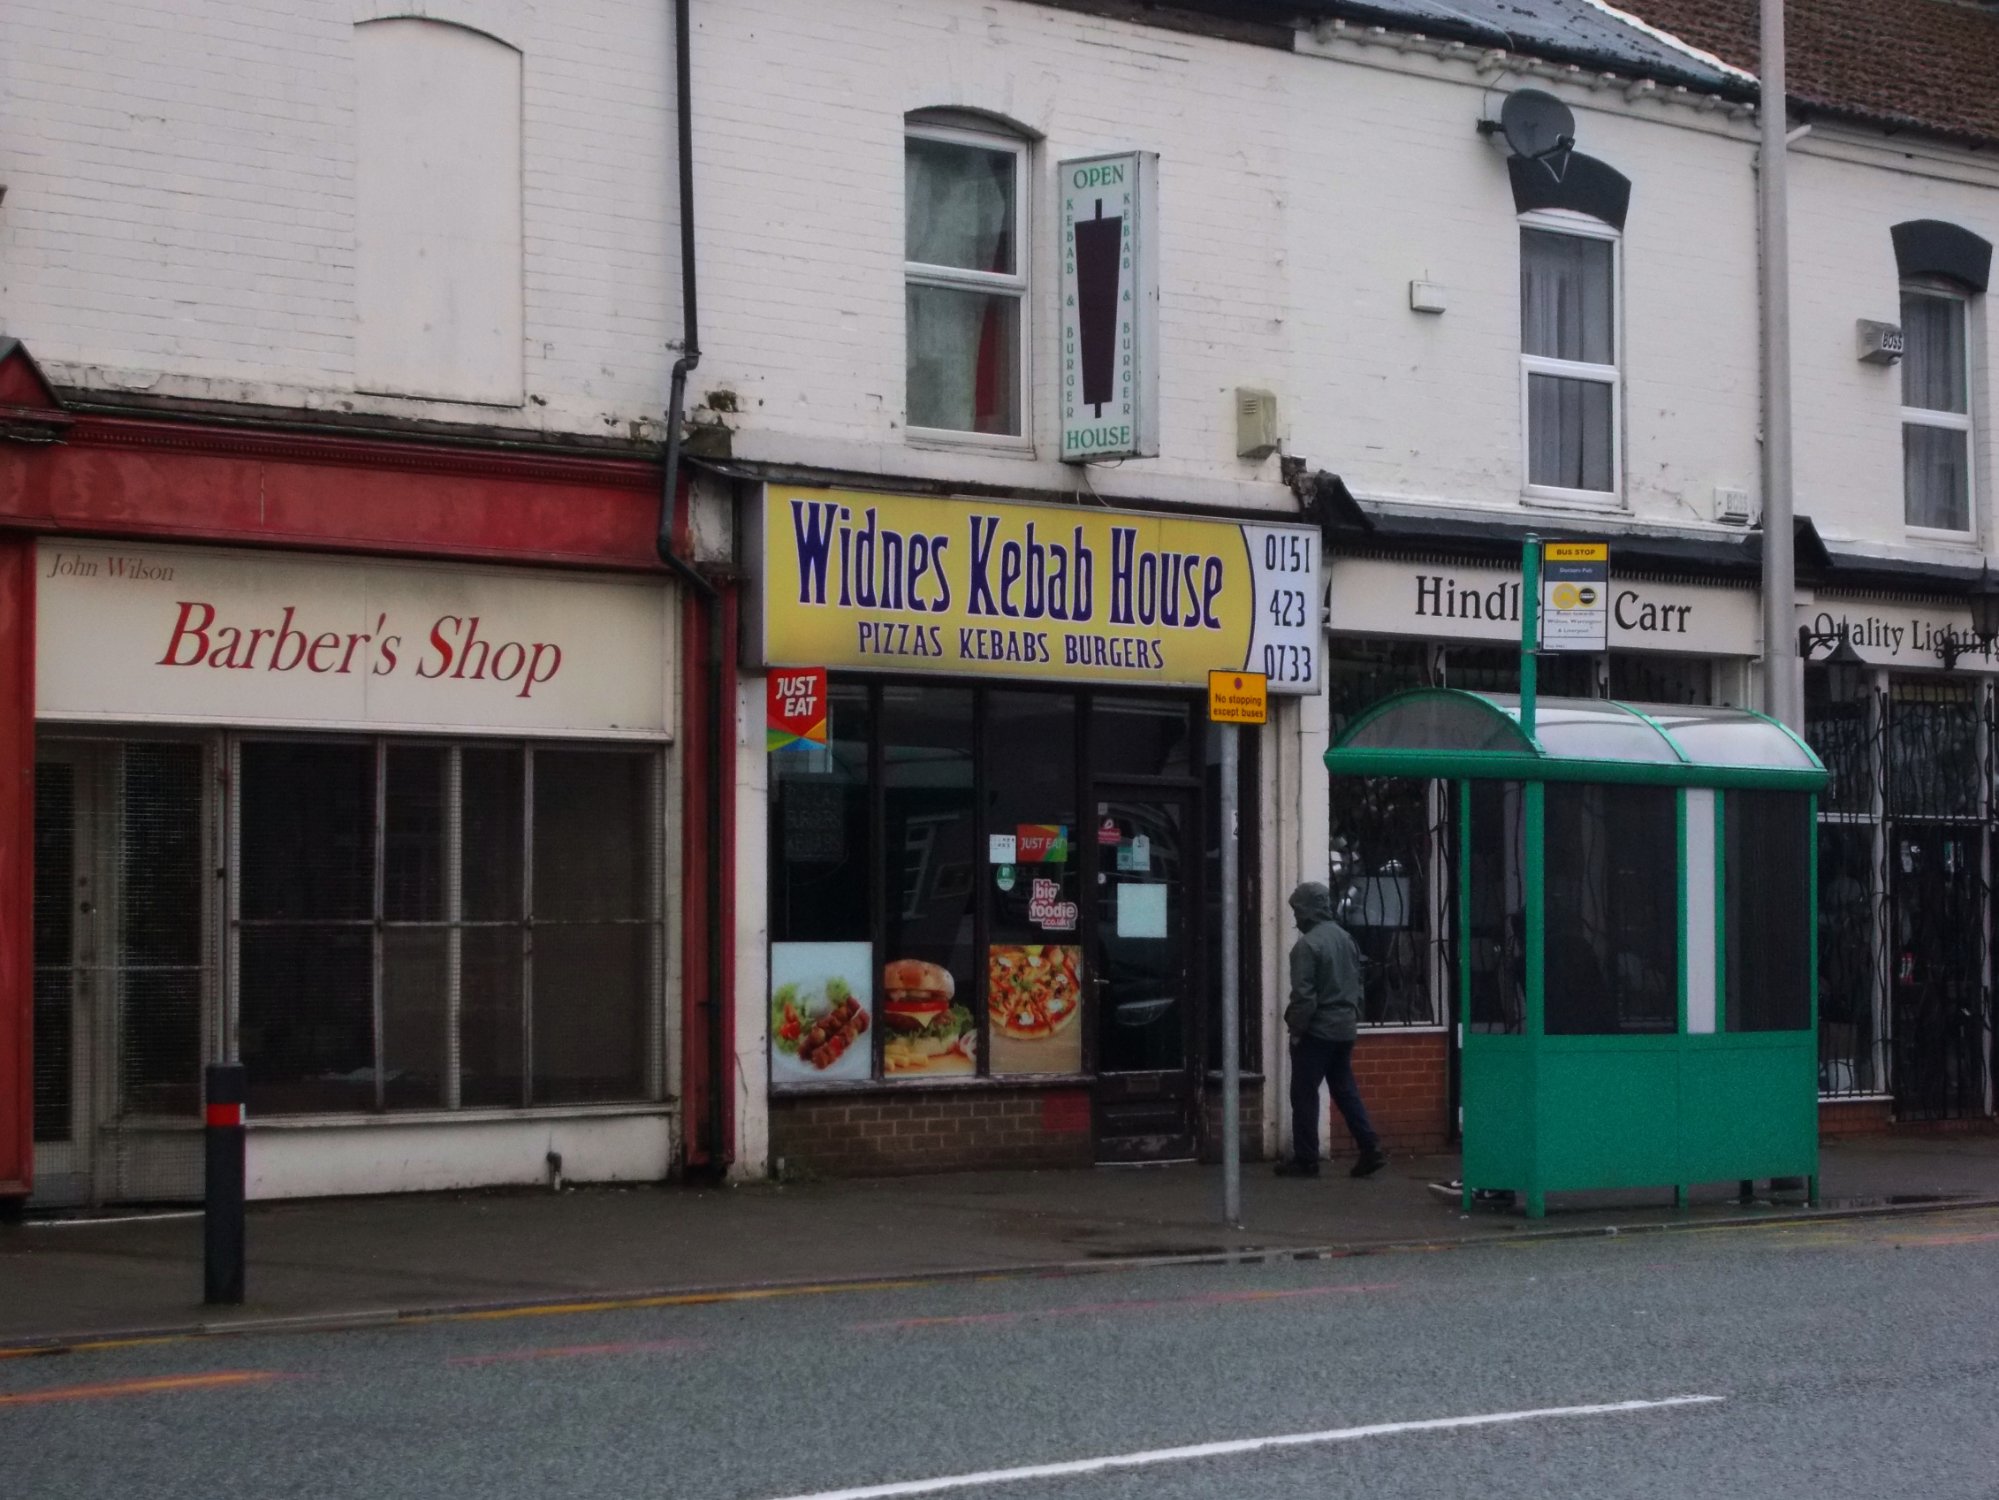 Widnes Kebab House